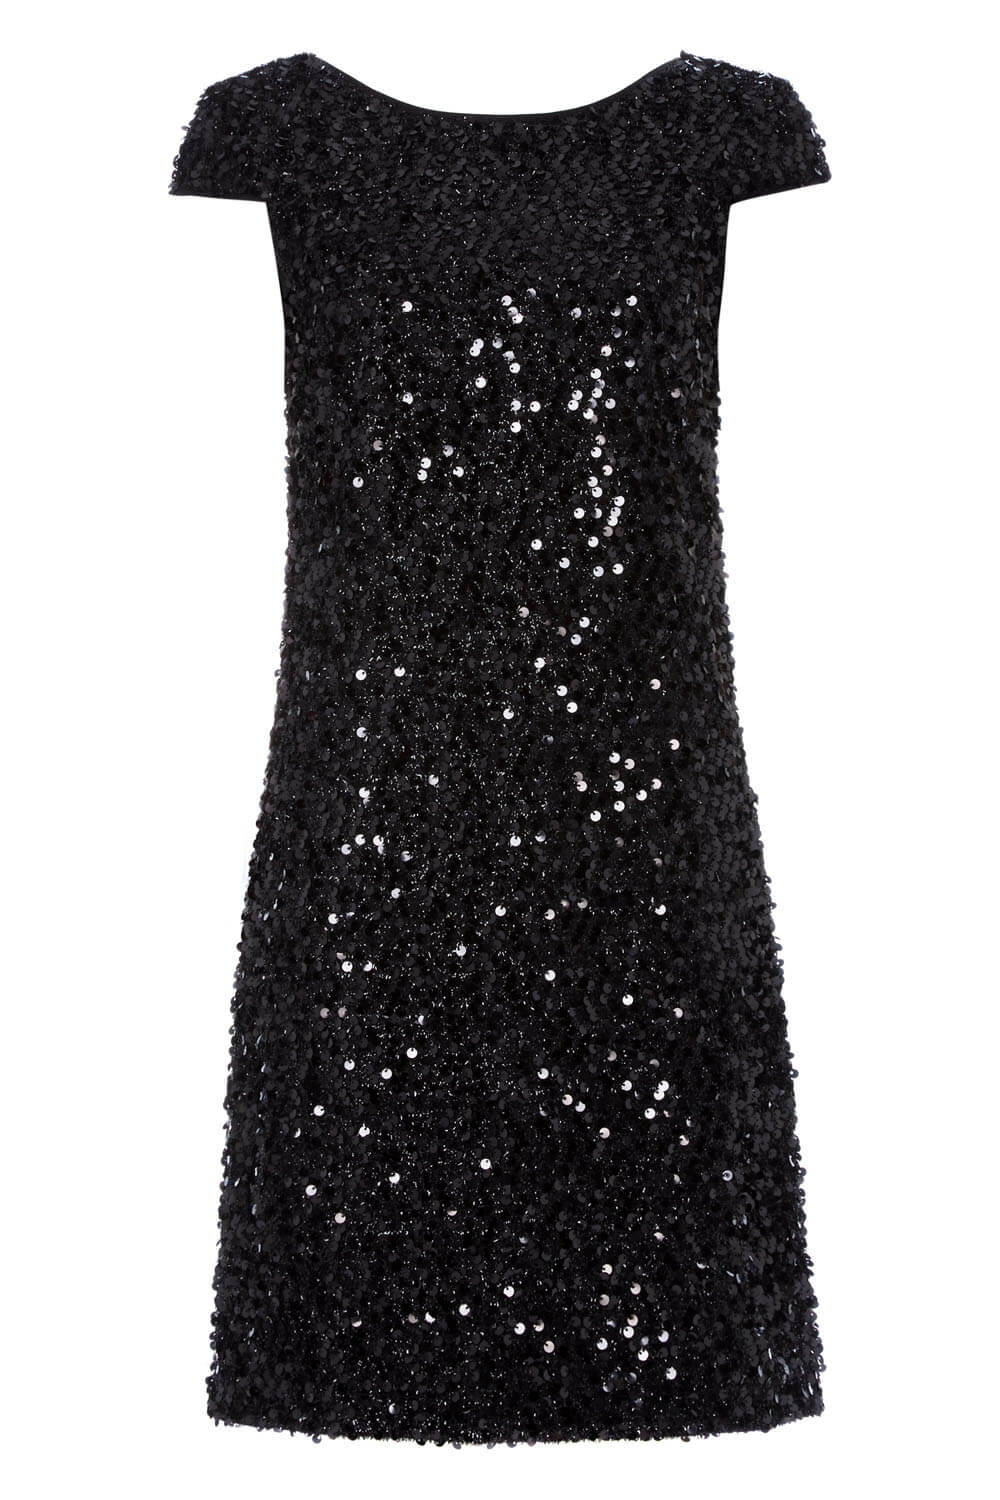 Black Sequin Tinsel Shift Dress, Image 4 of 4